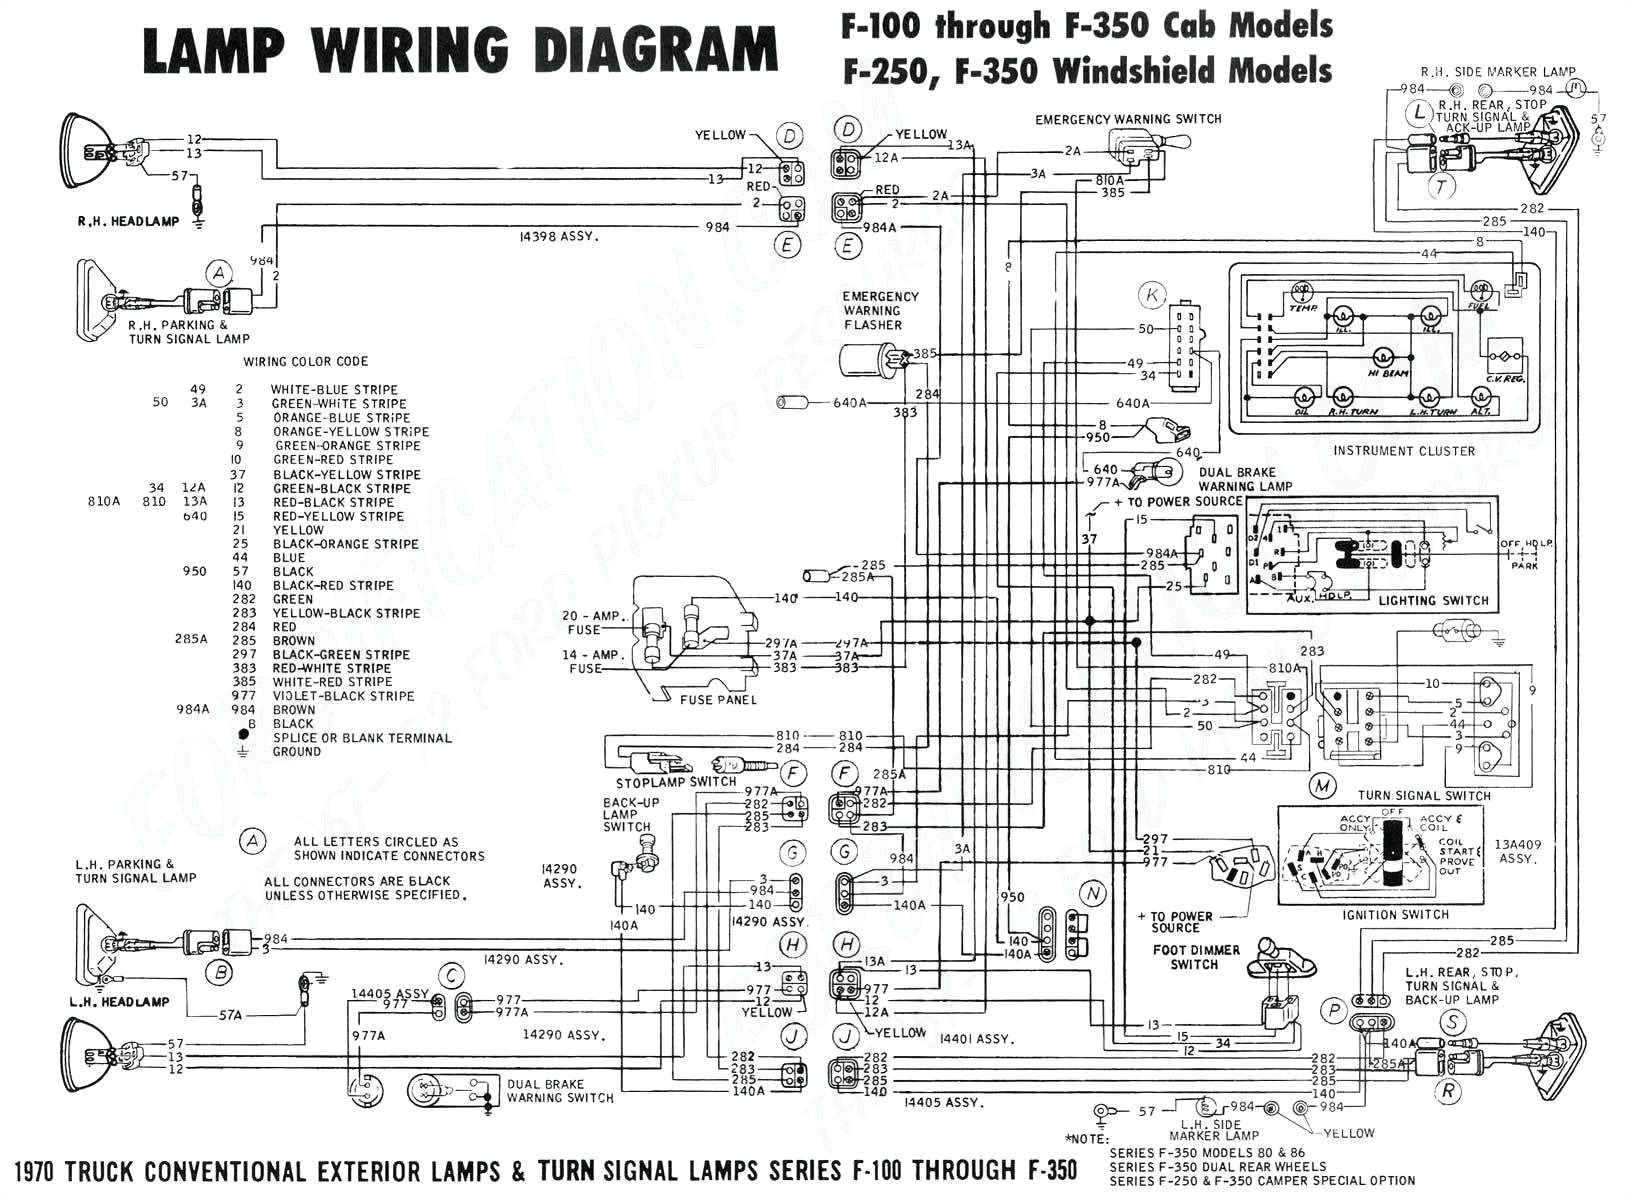 turn signal wiring schematic 1973 squareback wiring diagram blog mg turn signal wiring diagram